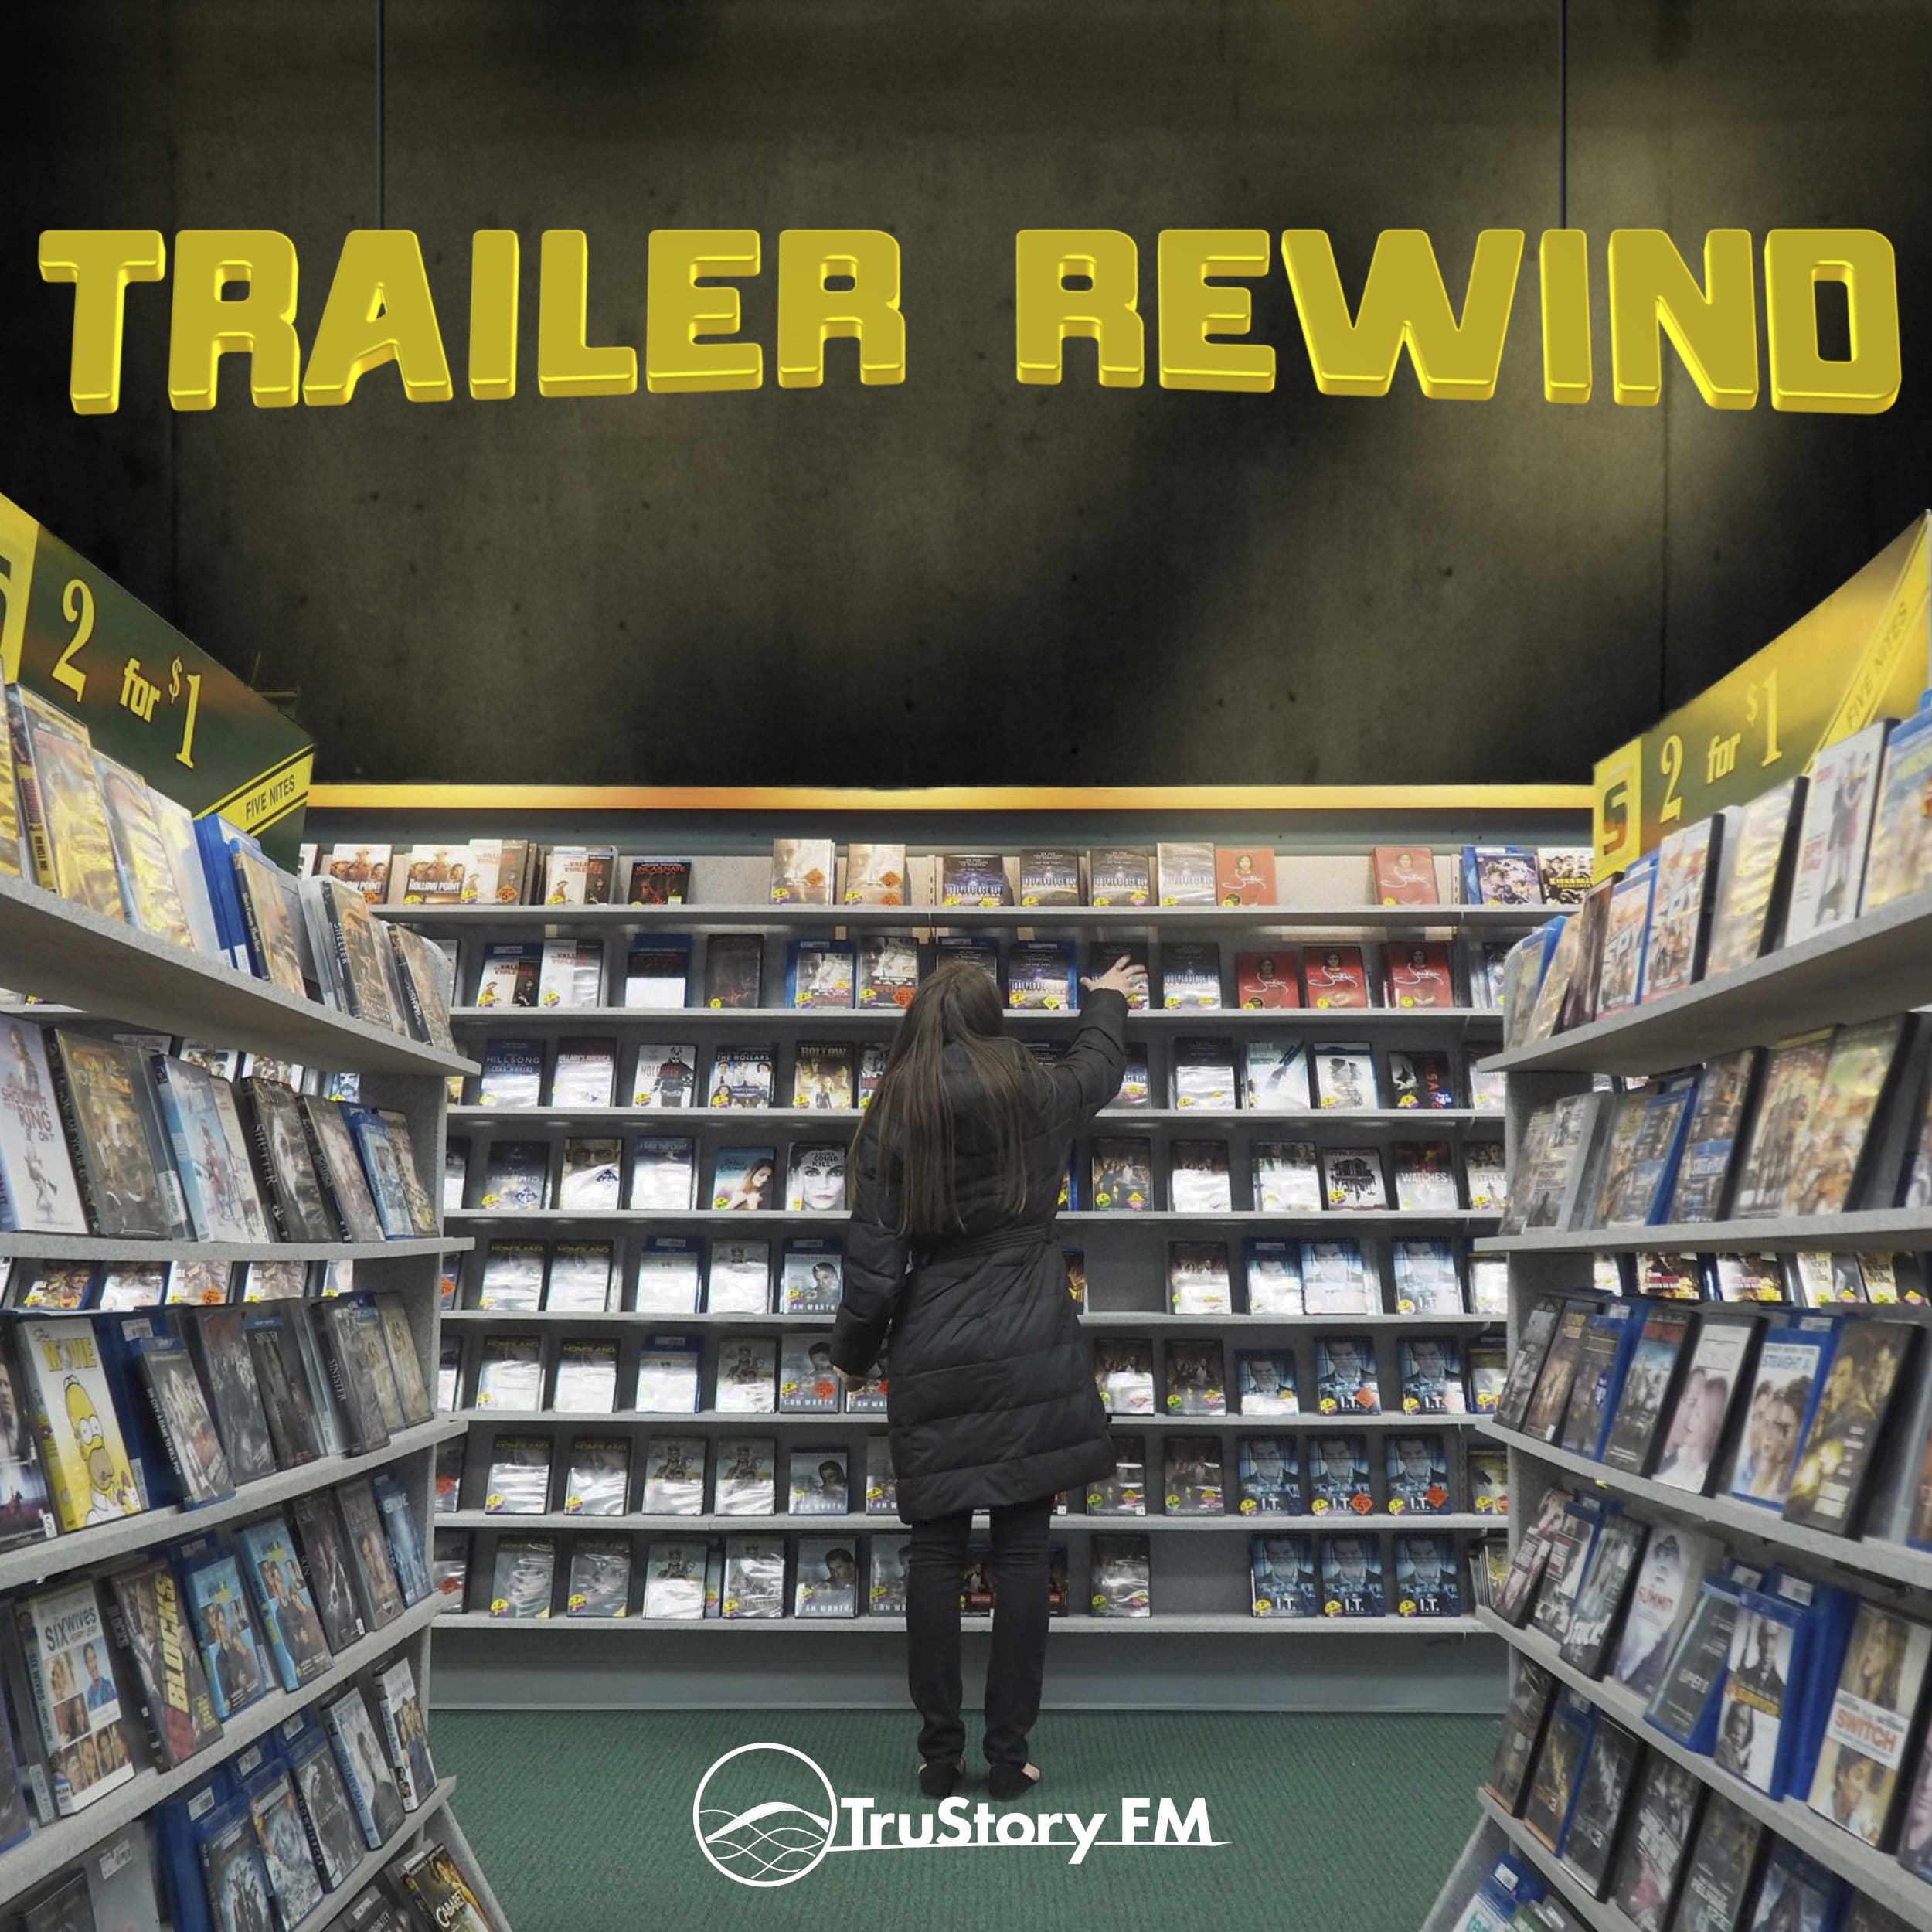 Trailer Rewind Thumb